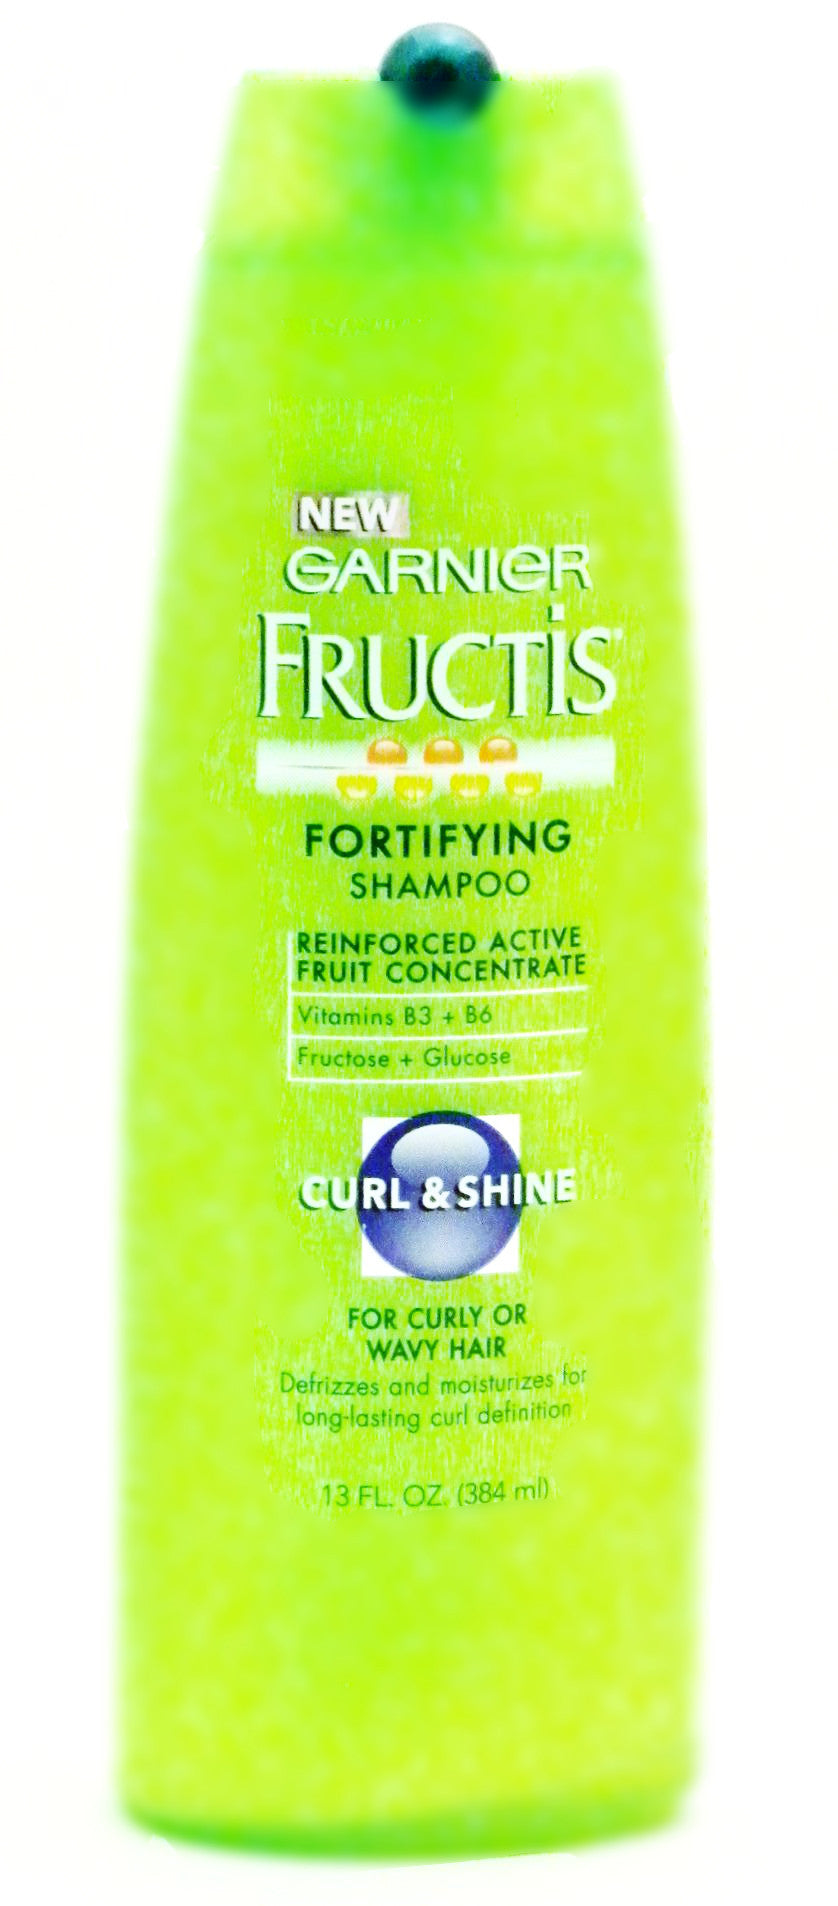 Garnier Fructis Fortifying Shampoo Curl & Shine 13 oz –